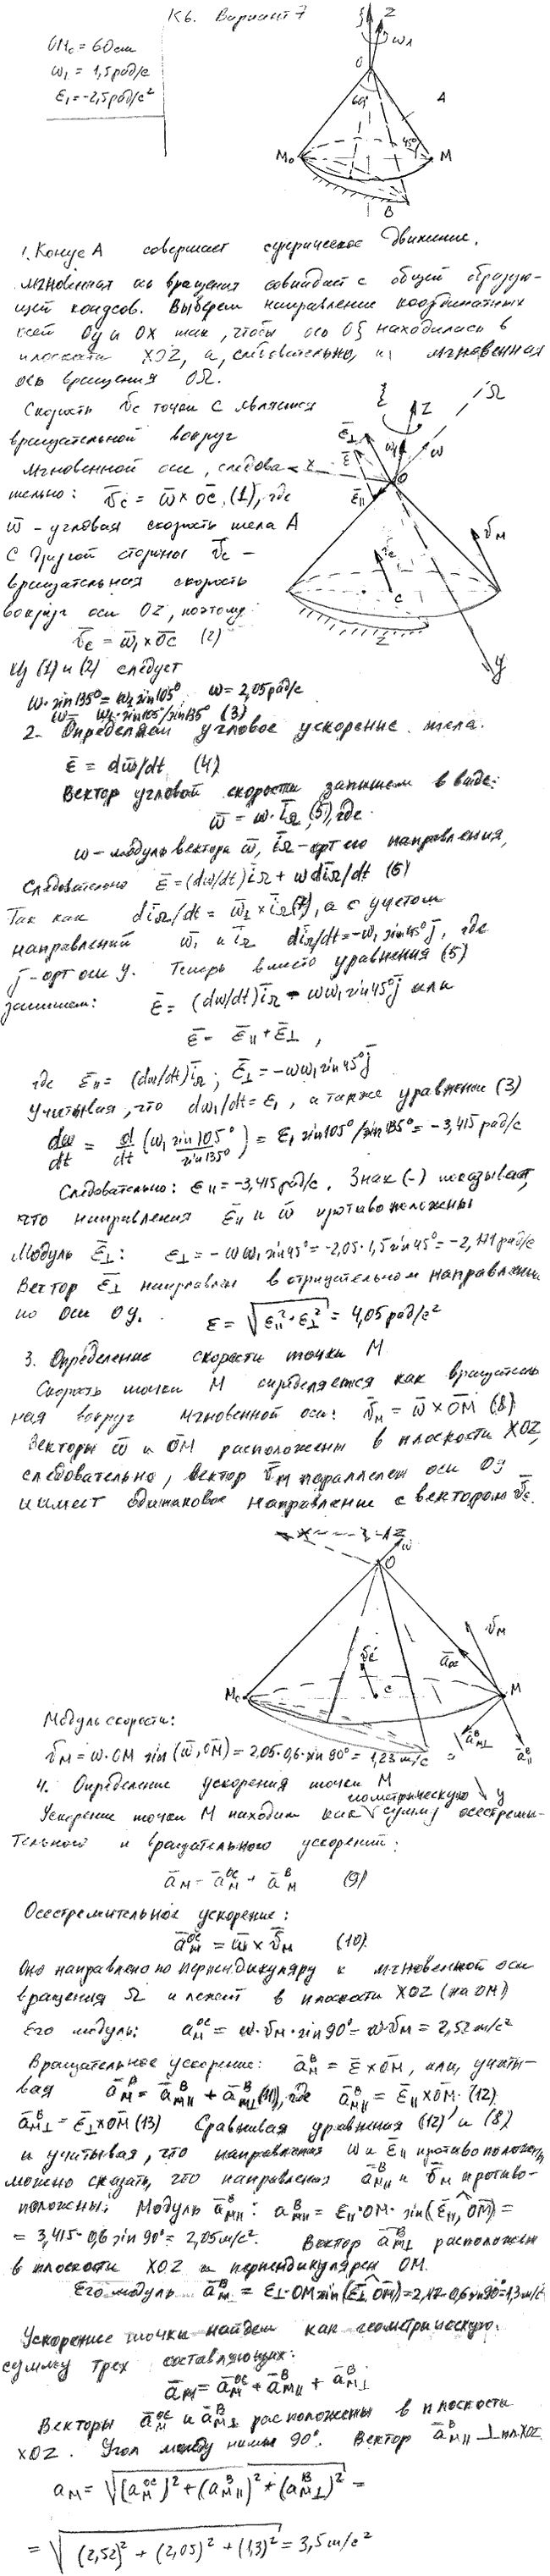 Задание К.6 вариант 7. OM0=60 см; ω1=1,5 рад/с; ε1=2,5 рад/с^2;